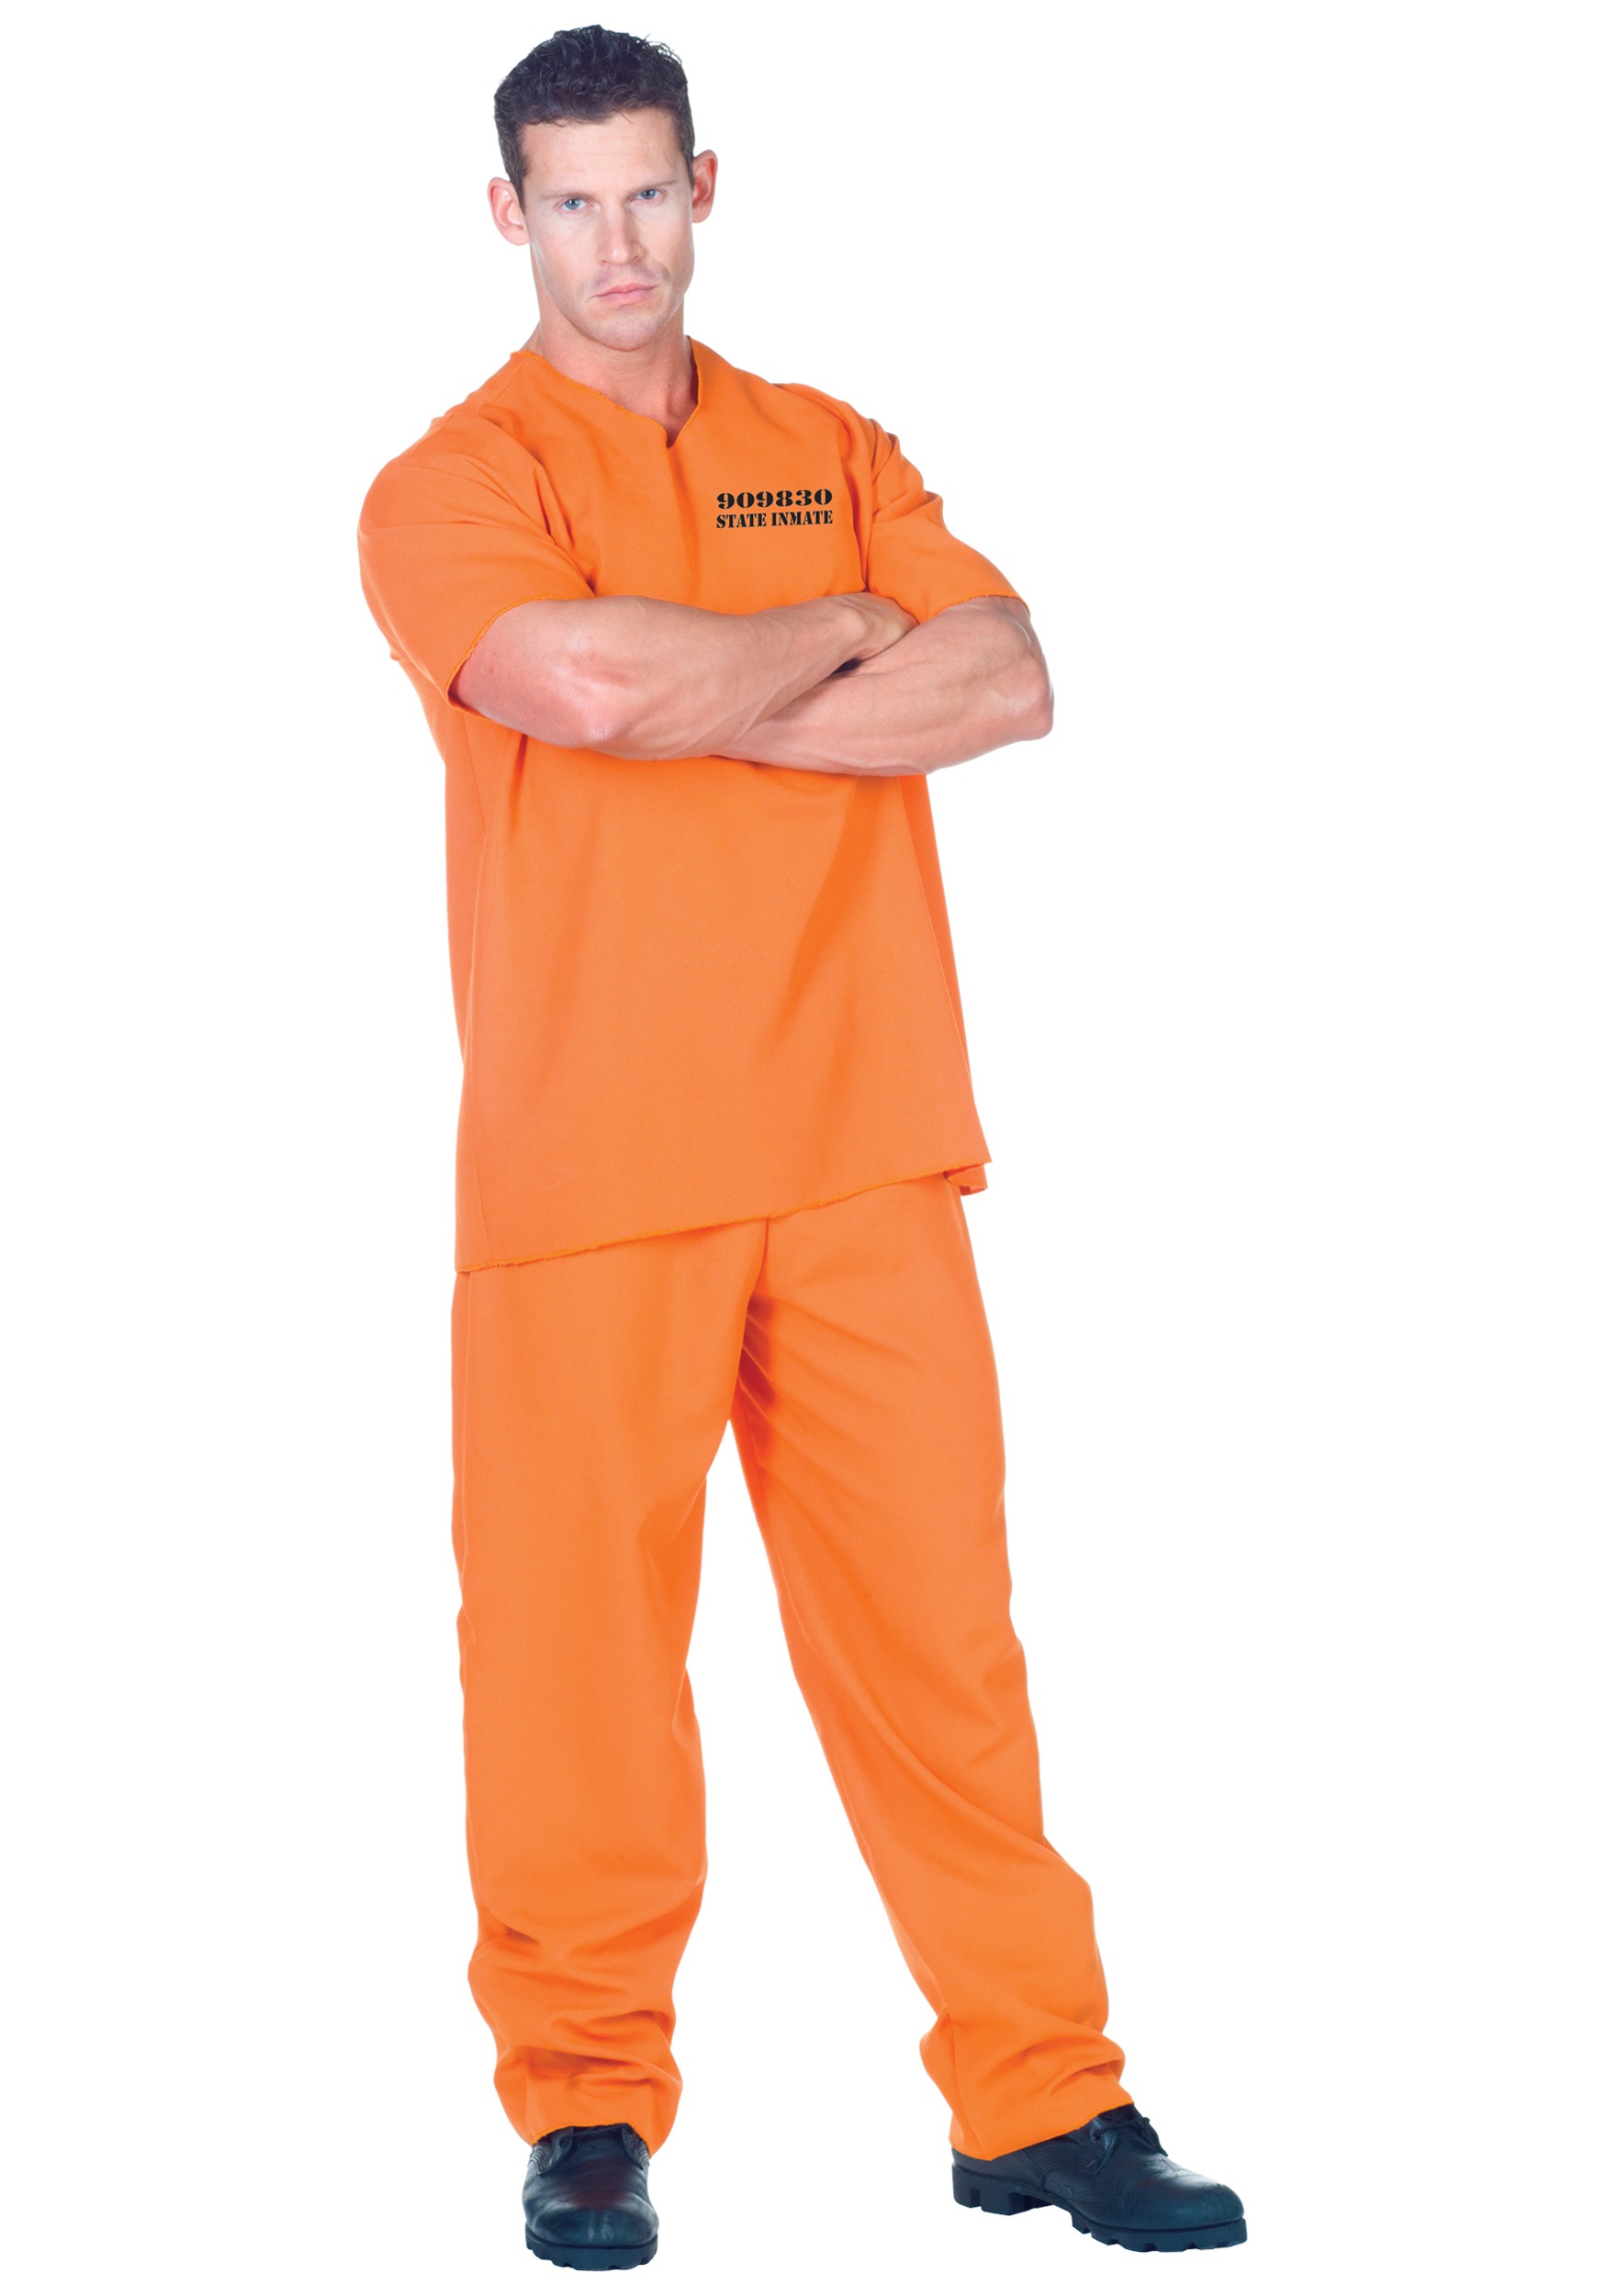 Public Offender Inmate Fancy Dress Costume